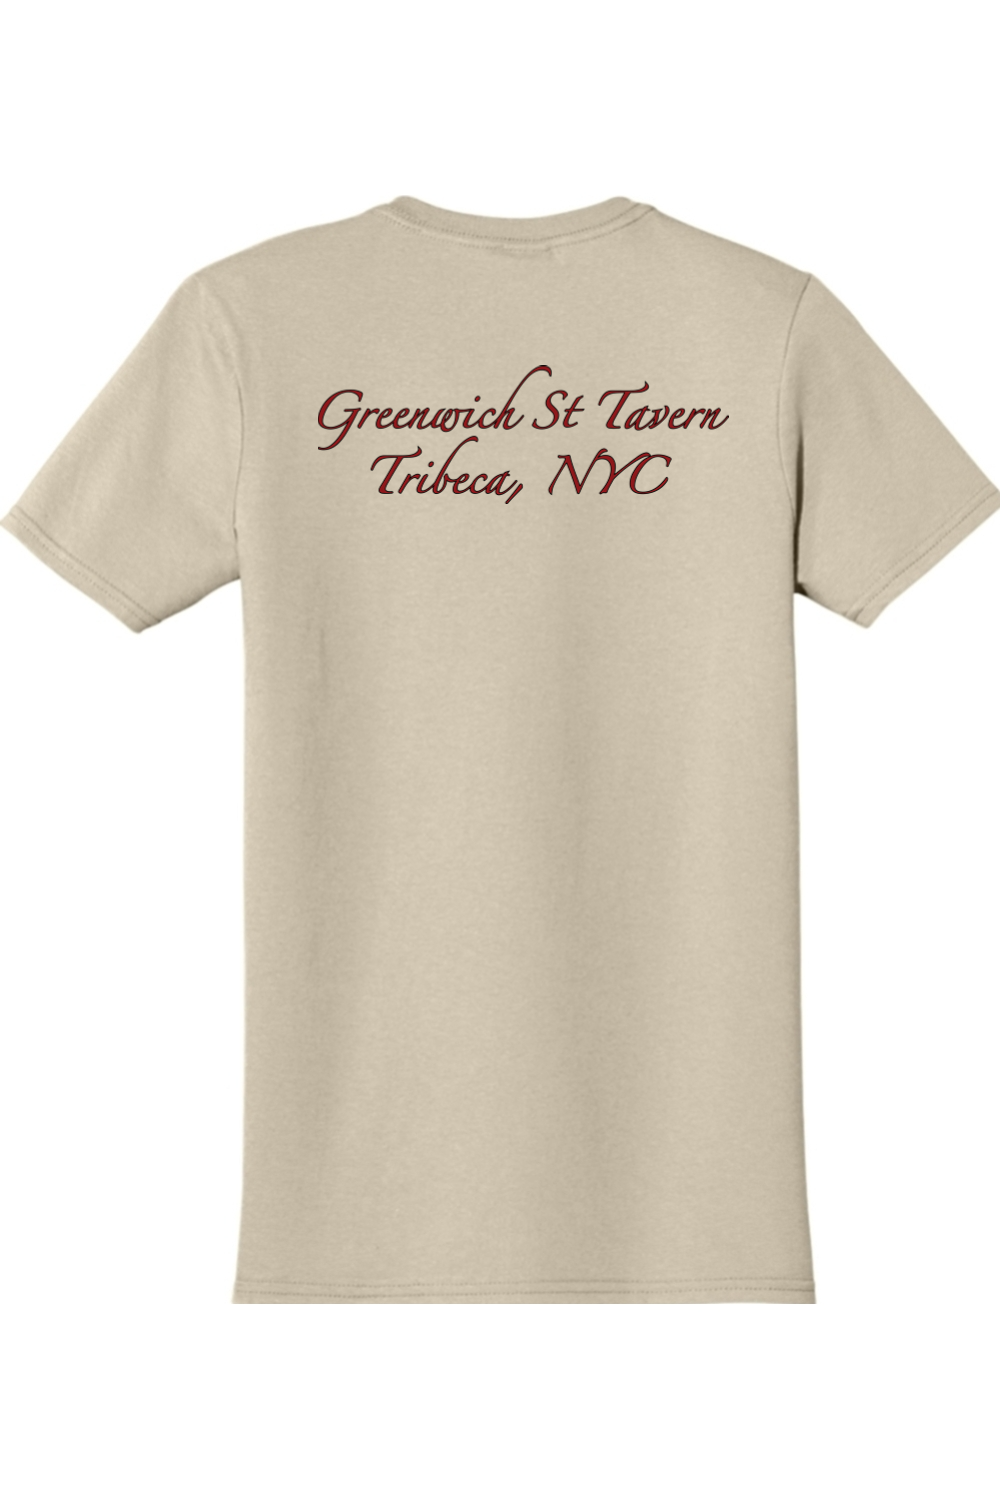 Greenwich Street Tavern Classic Crest T-Shirt